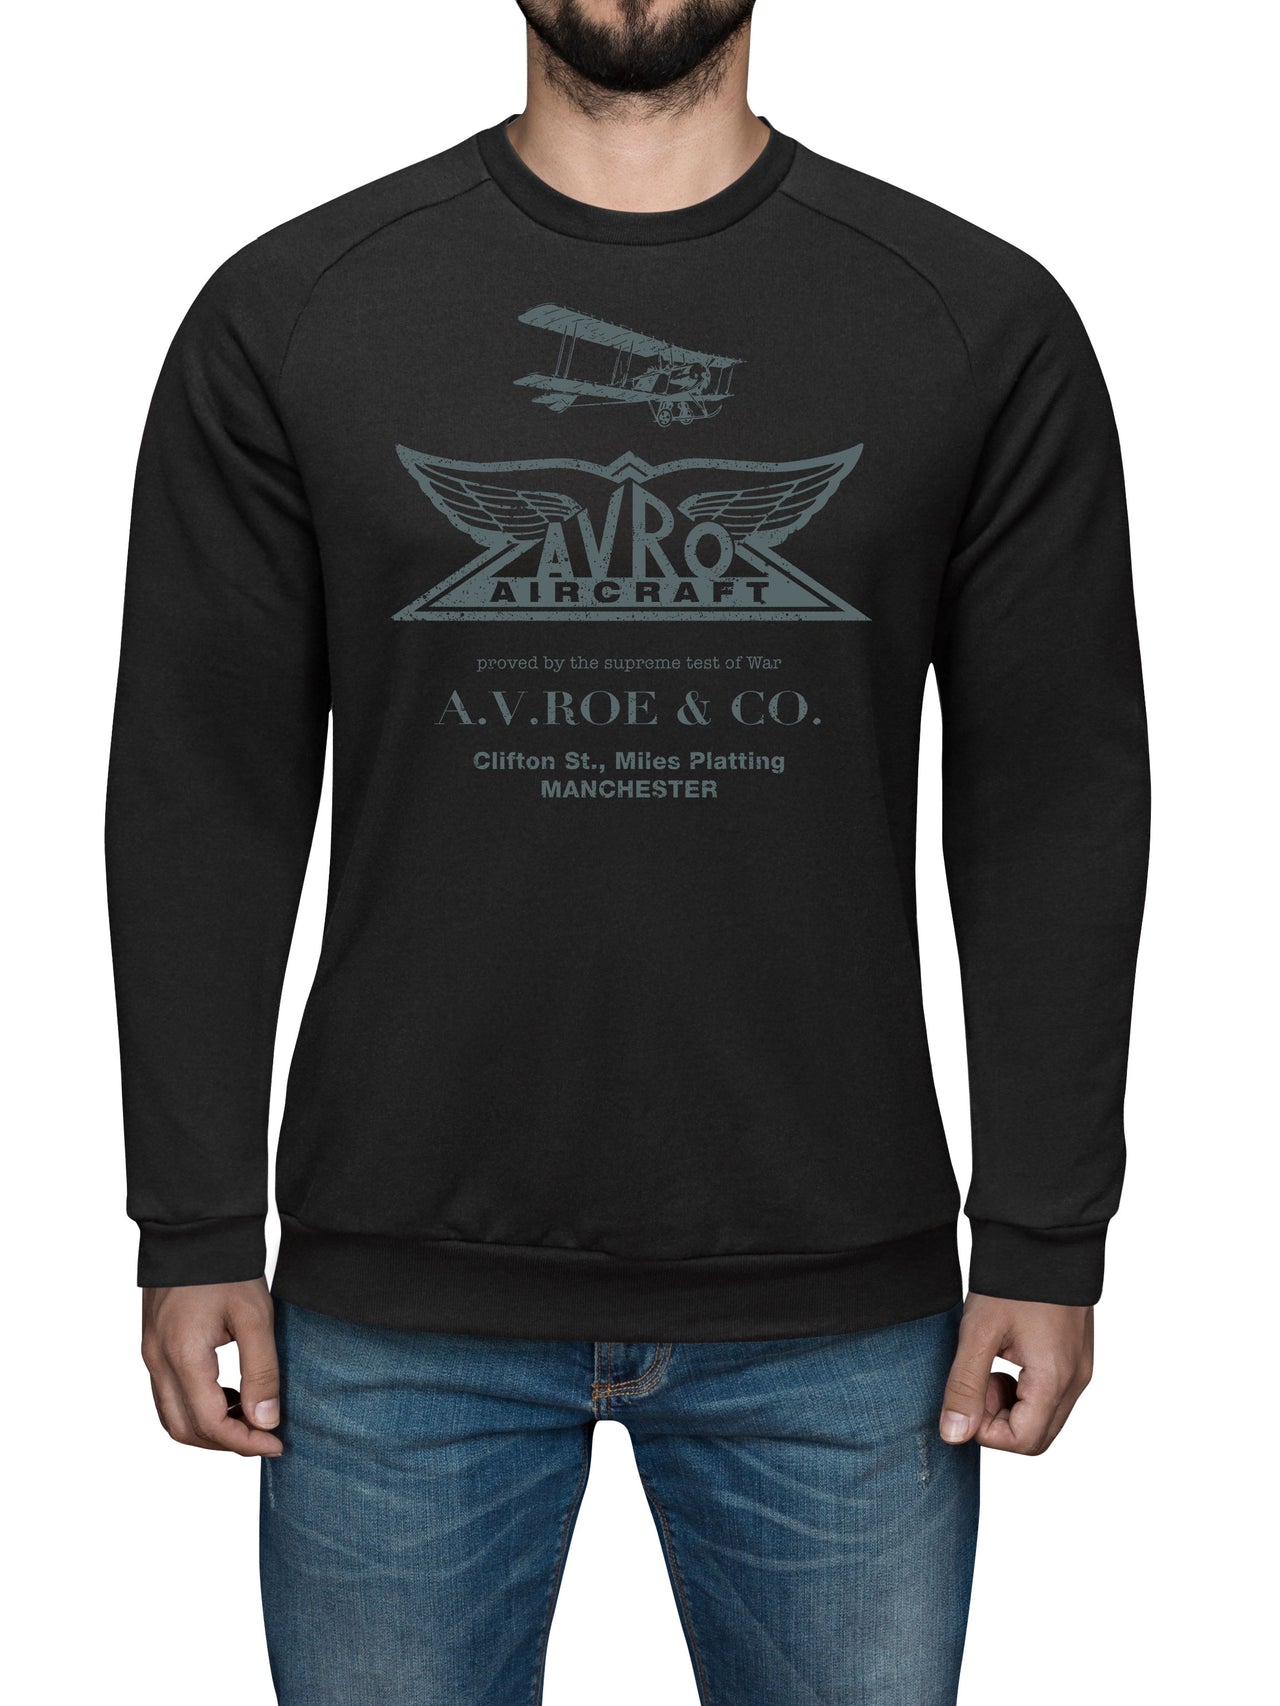 Avro - Sweat Shirt